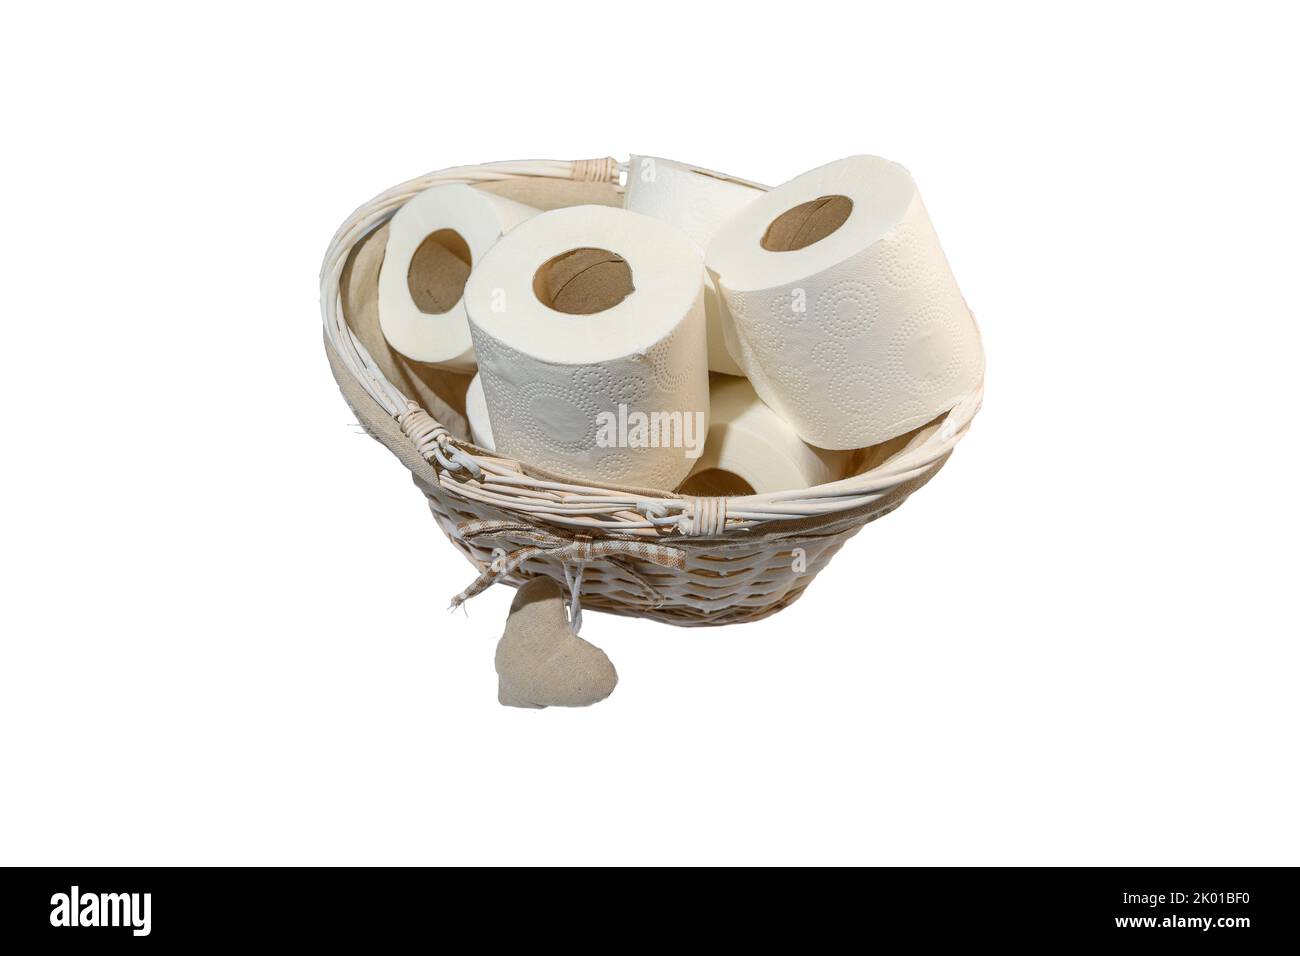 basket of toilet tissue rolls Stock Photo